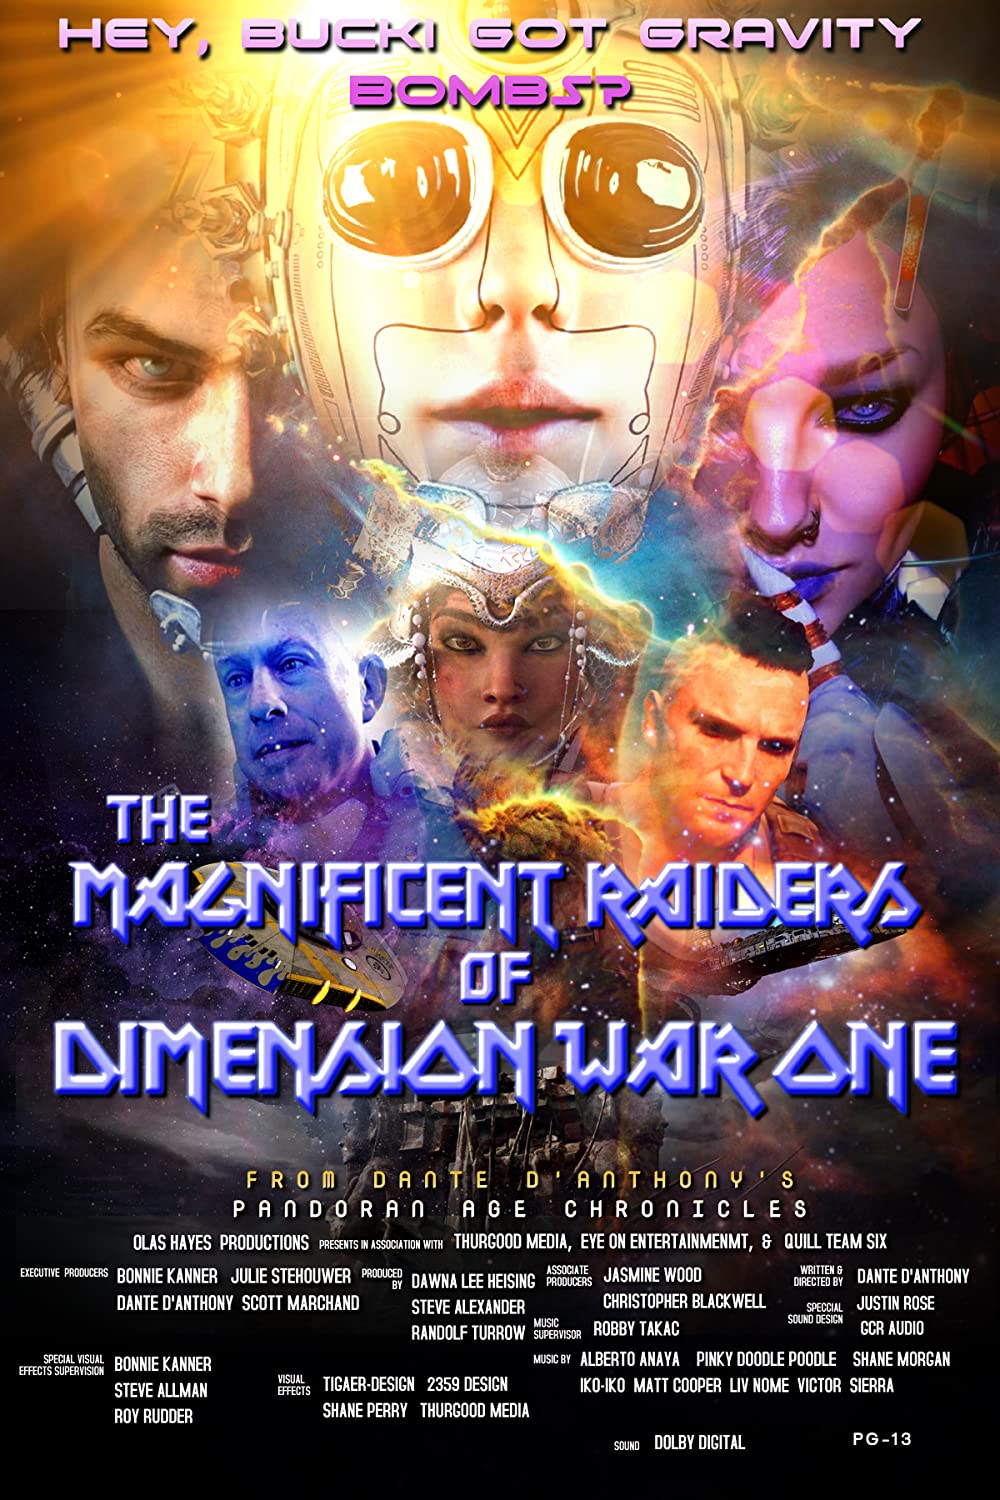 affiche du film The Magnificent Raiders of Dimension War One